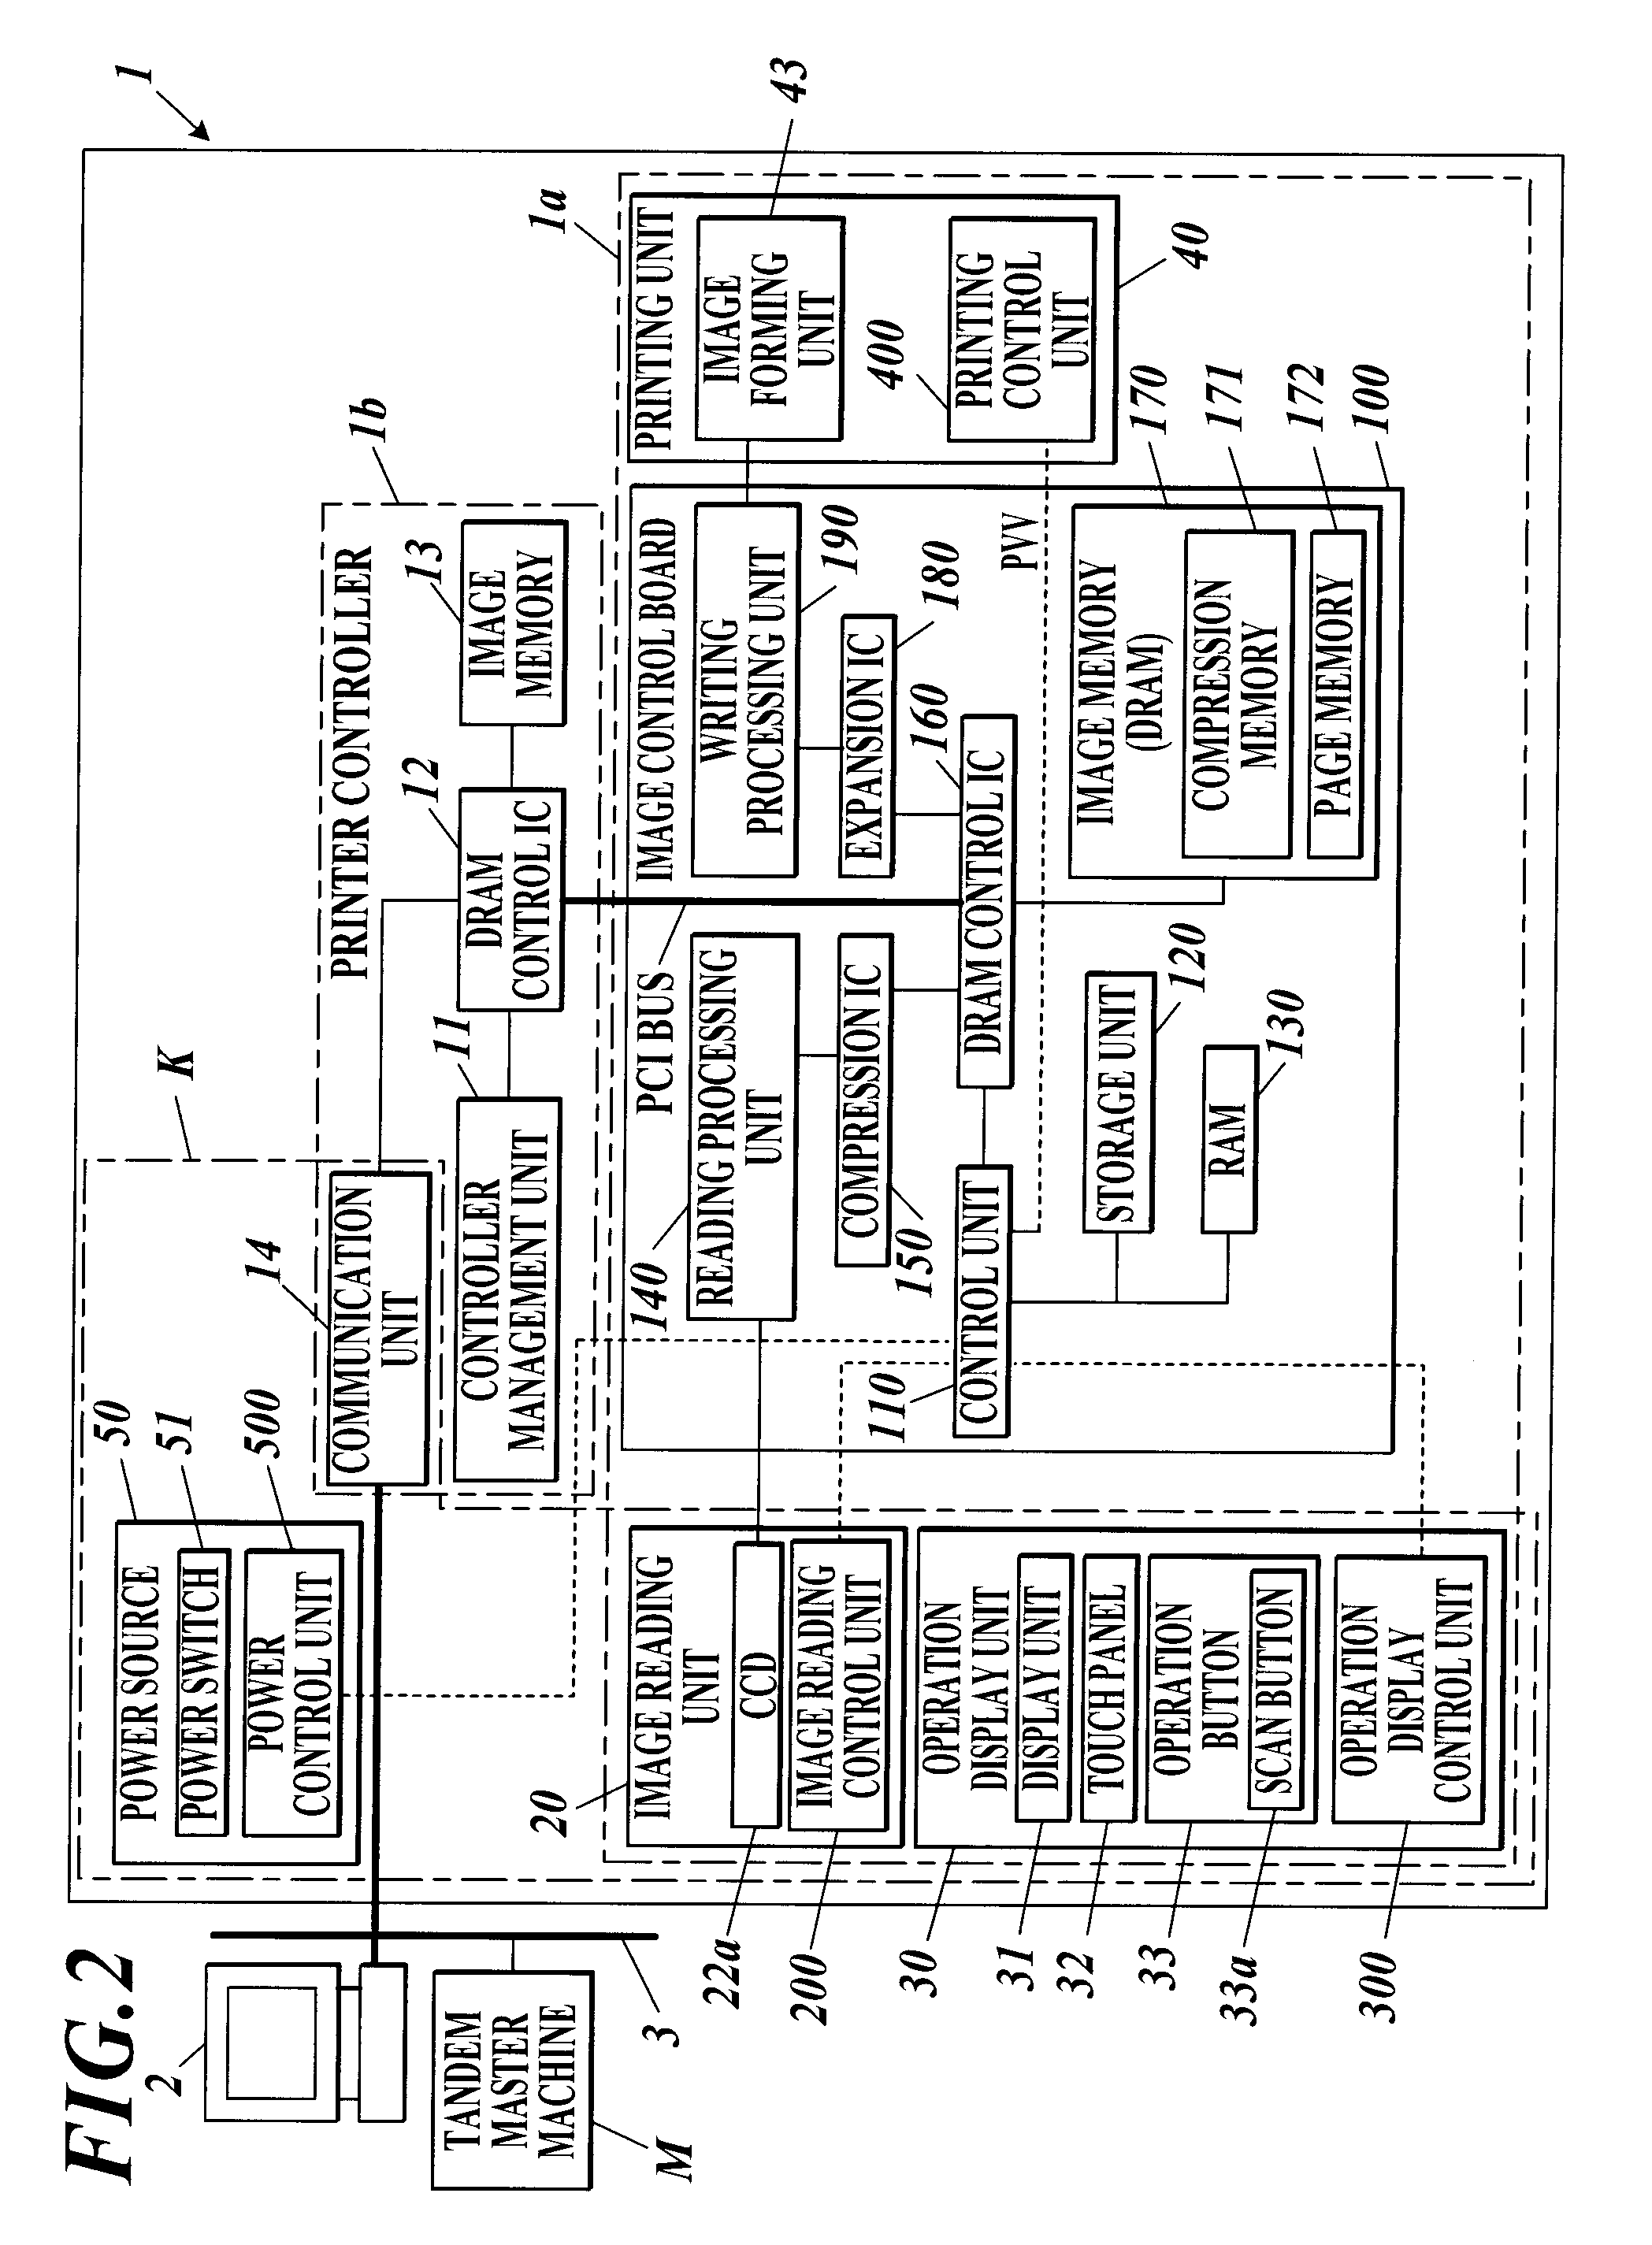 Image forming apparatus and initial screen display method